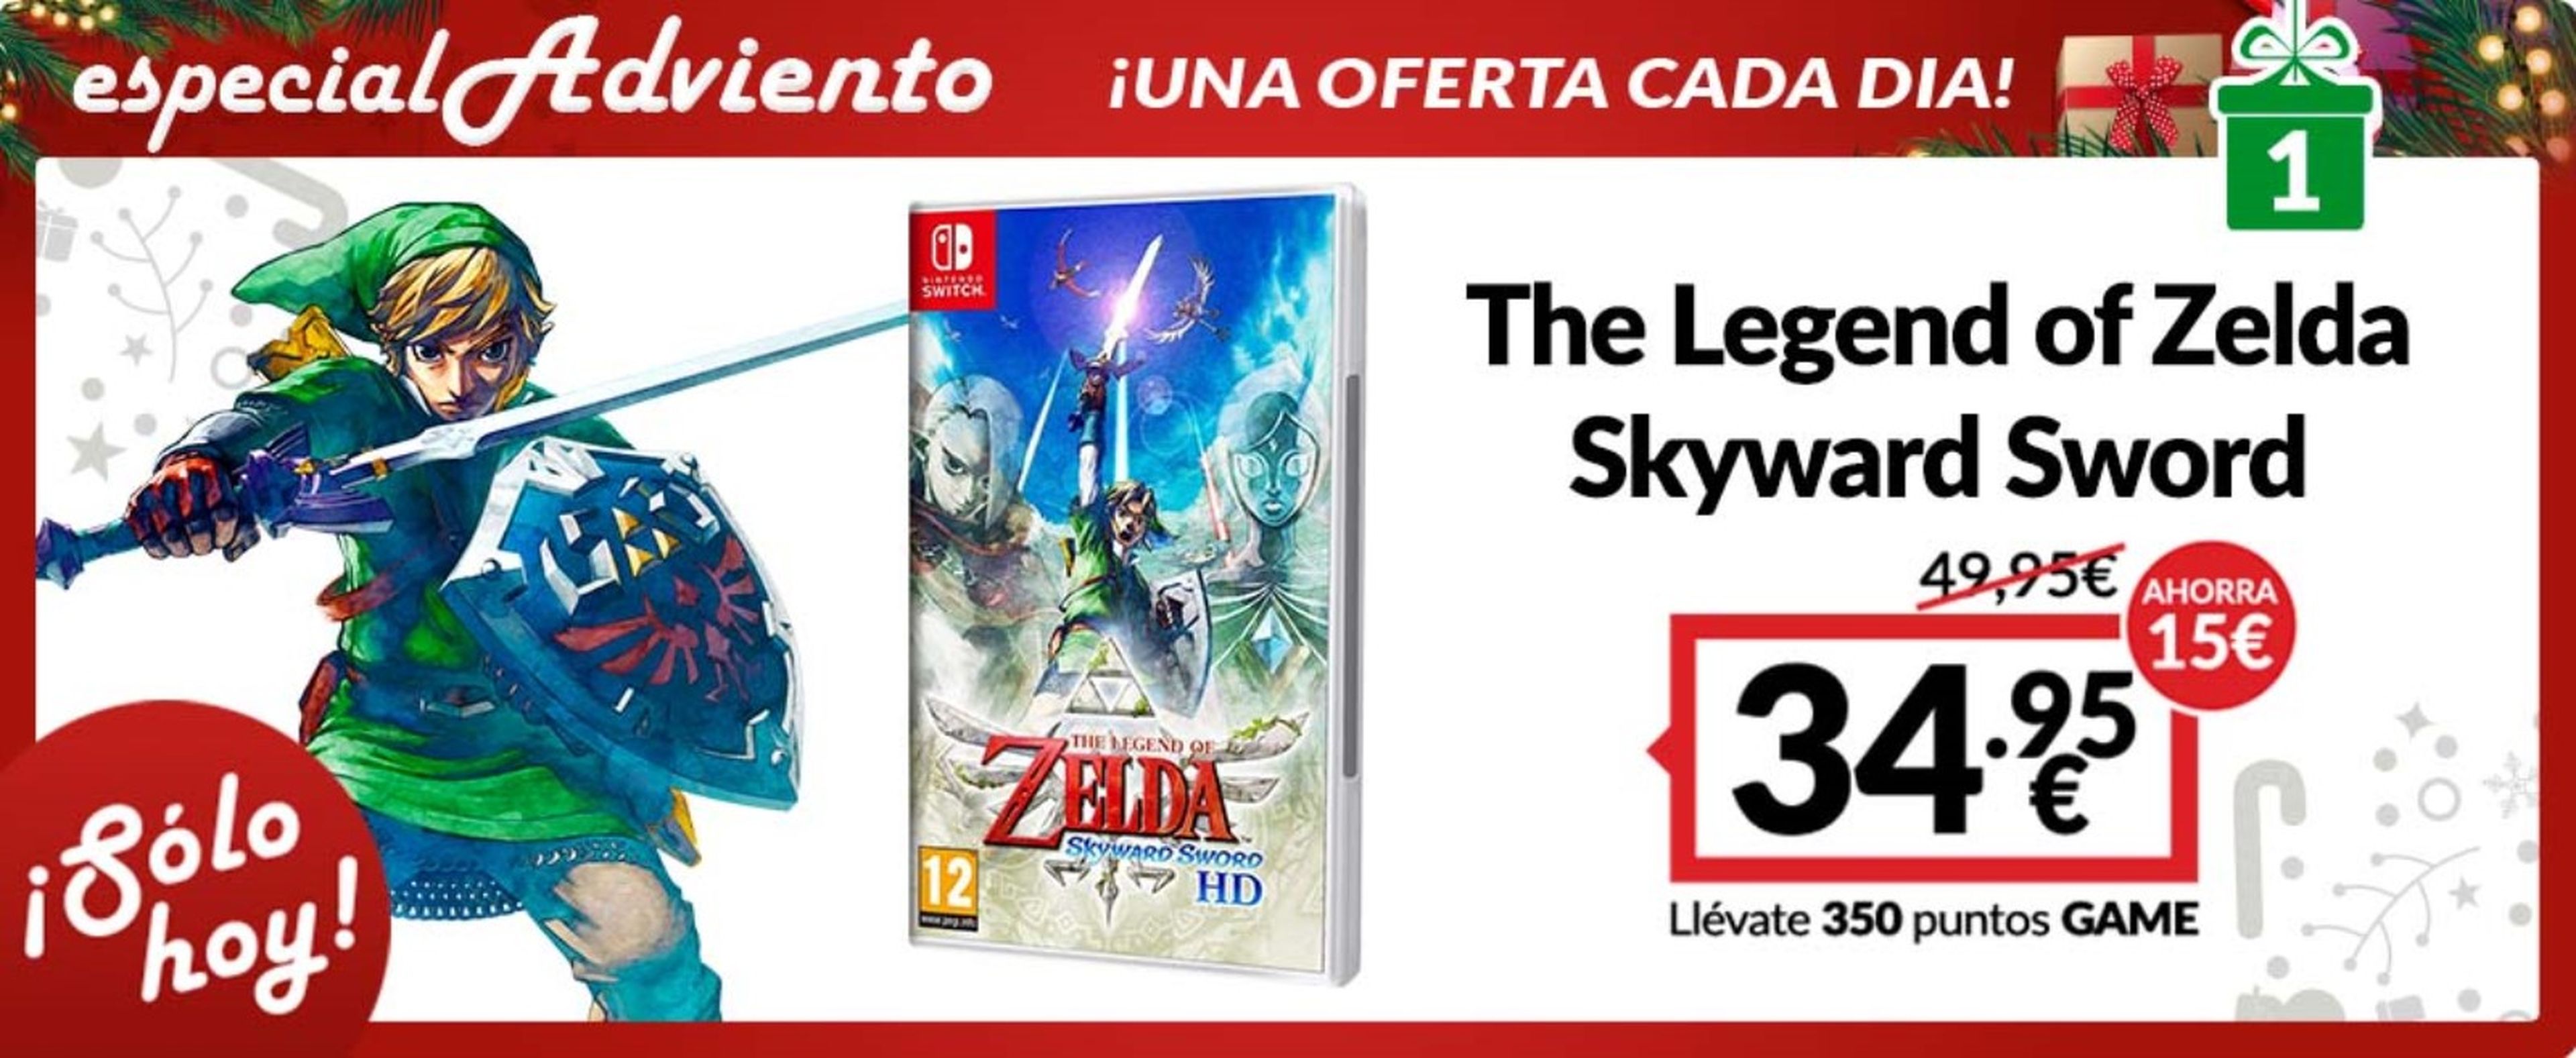 The Legend of Zelda Skyward Sword HD - Oferta especial de adviento GAME